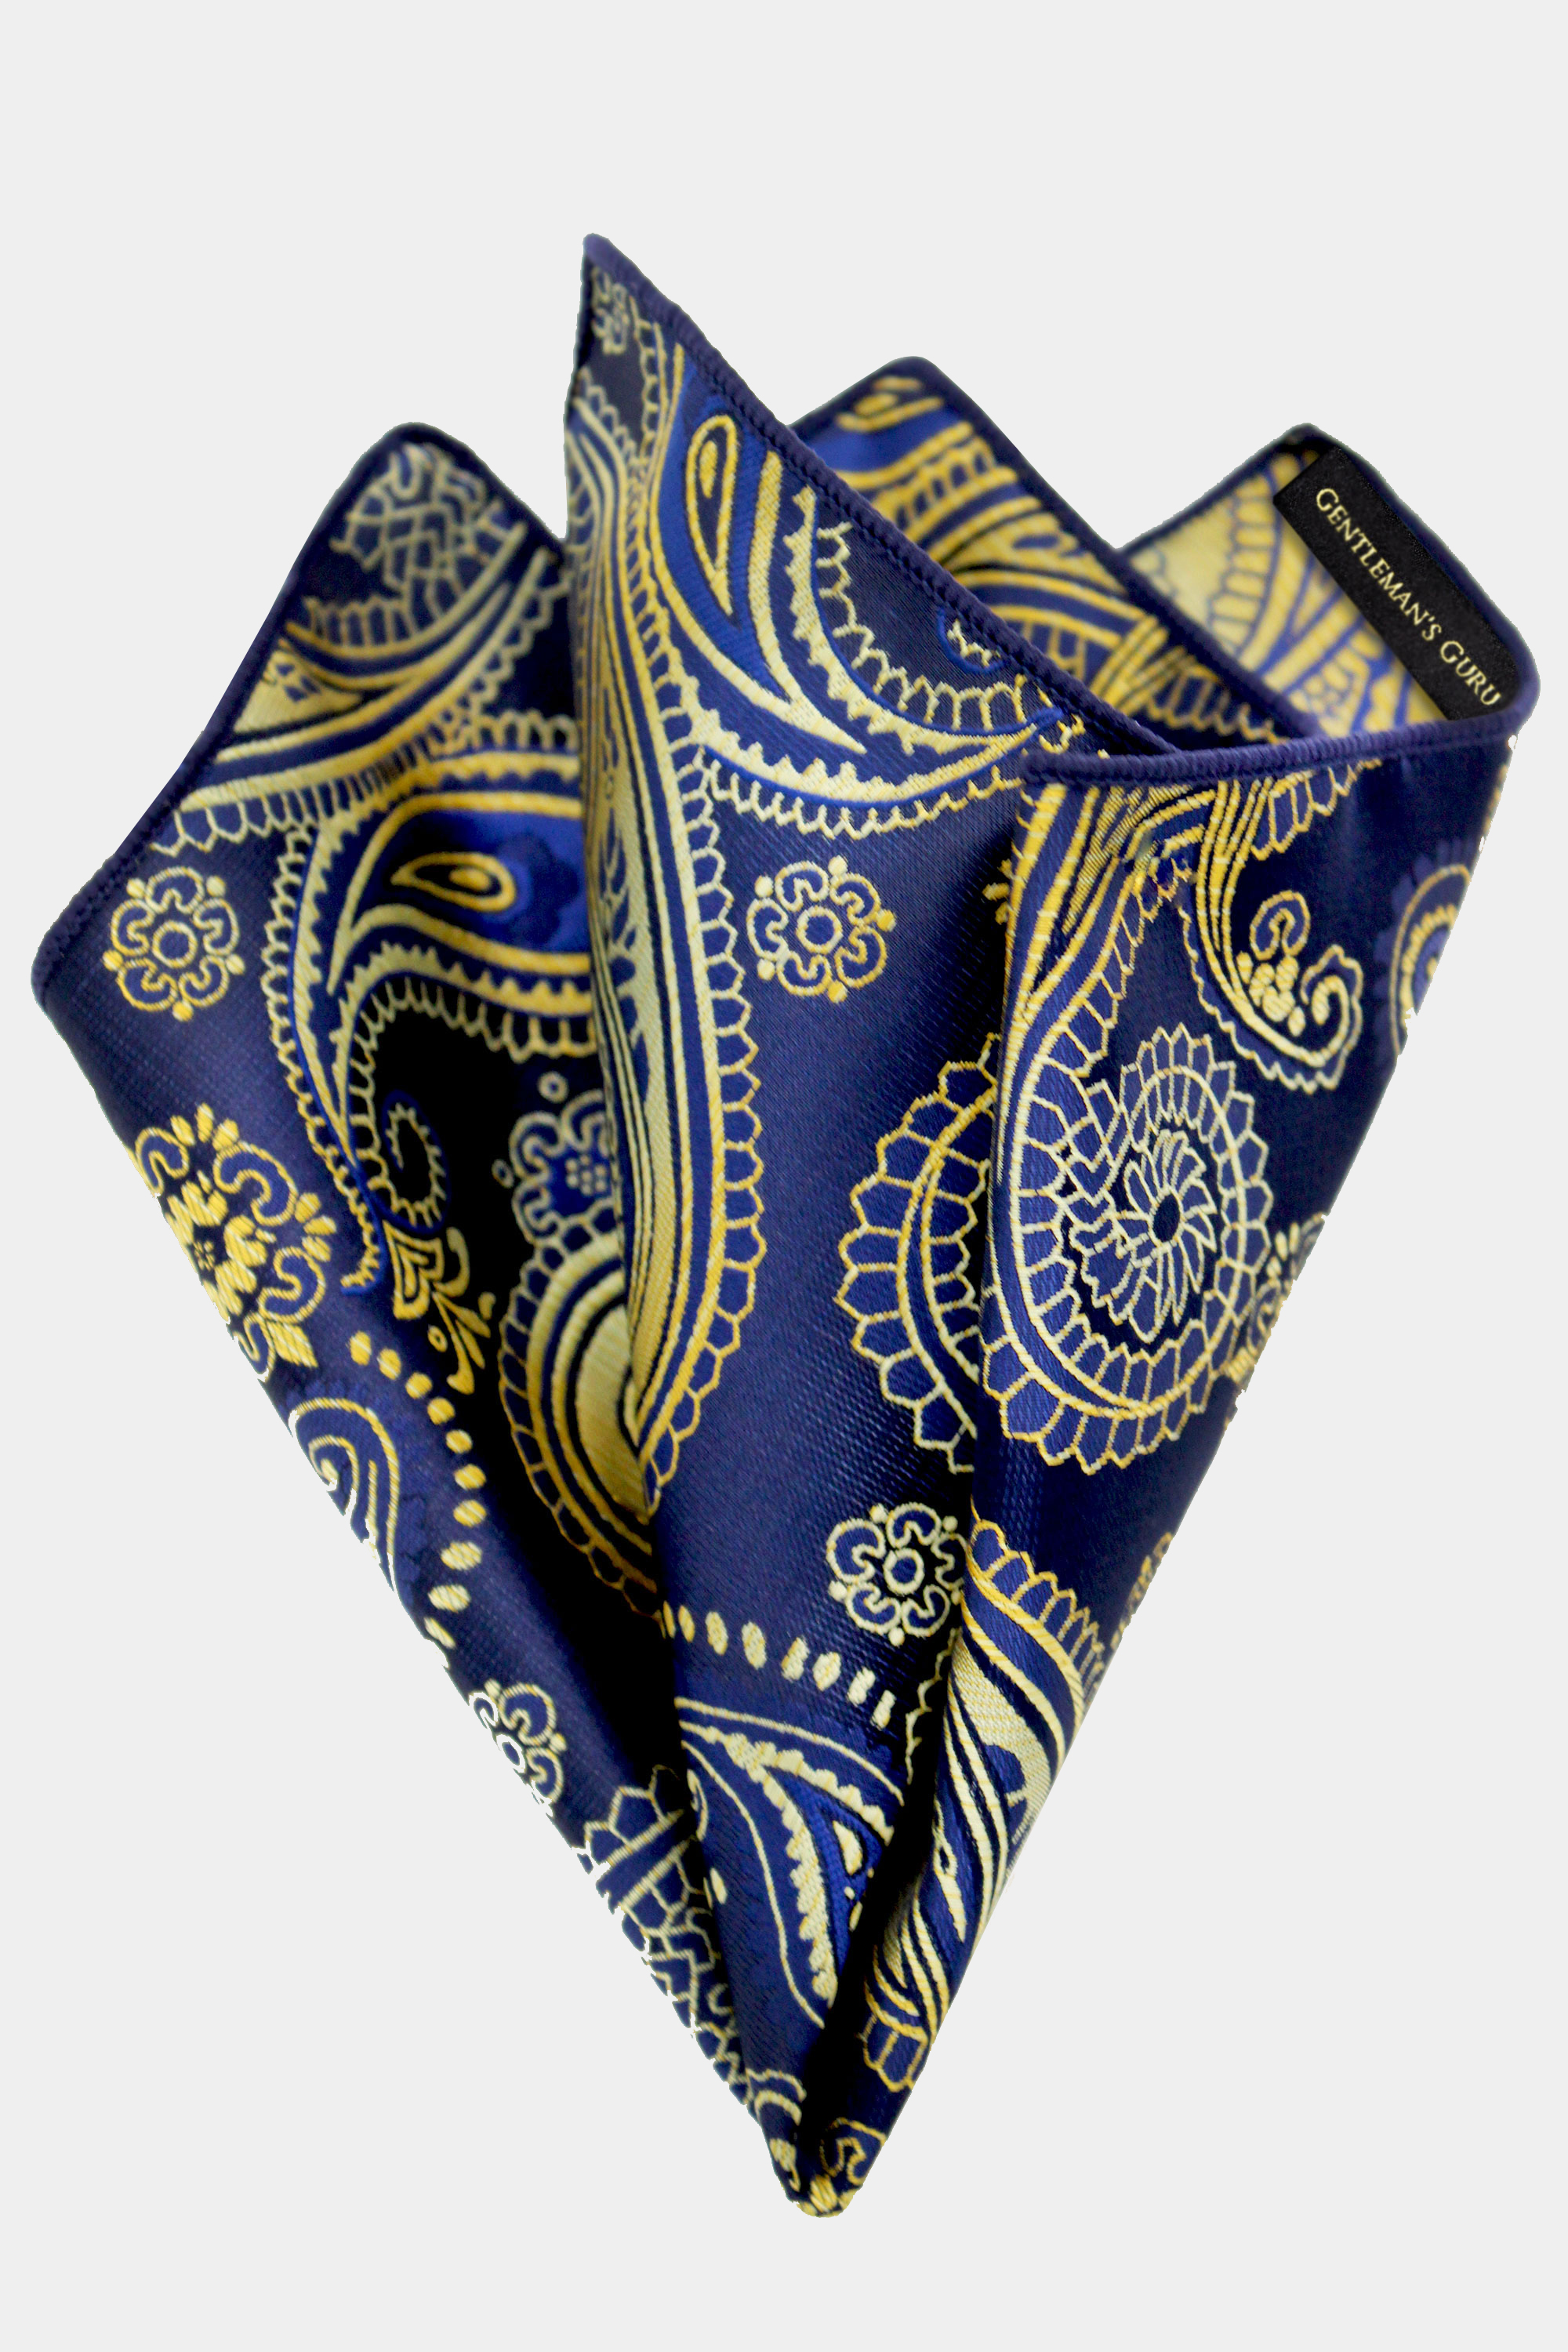 Navy-Blue-and-Gold-Paisley-Pocket-Square-Handkerchief-from-Gentlemansguru.com_